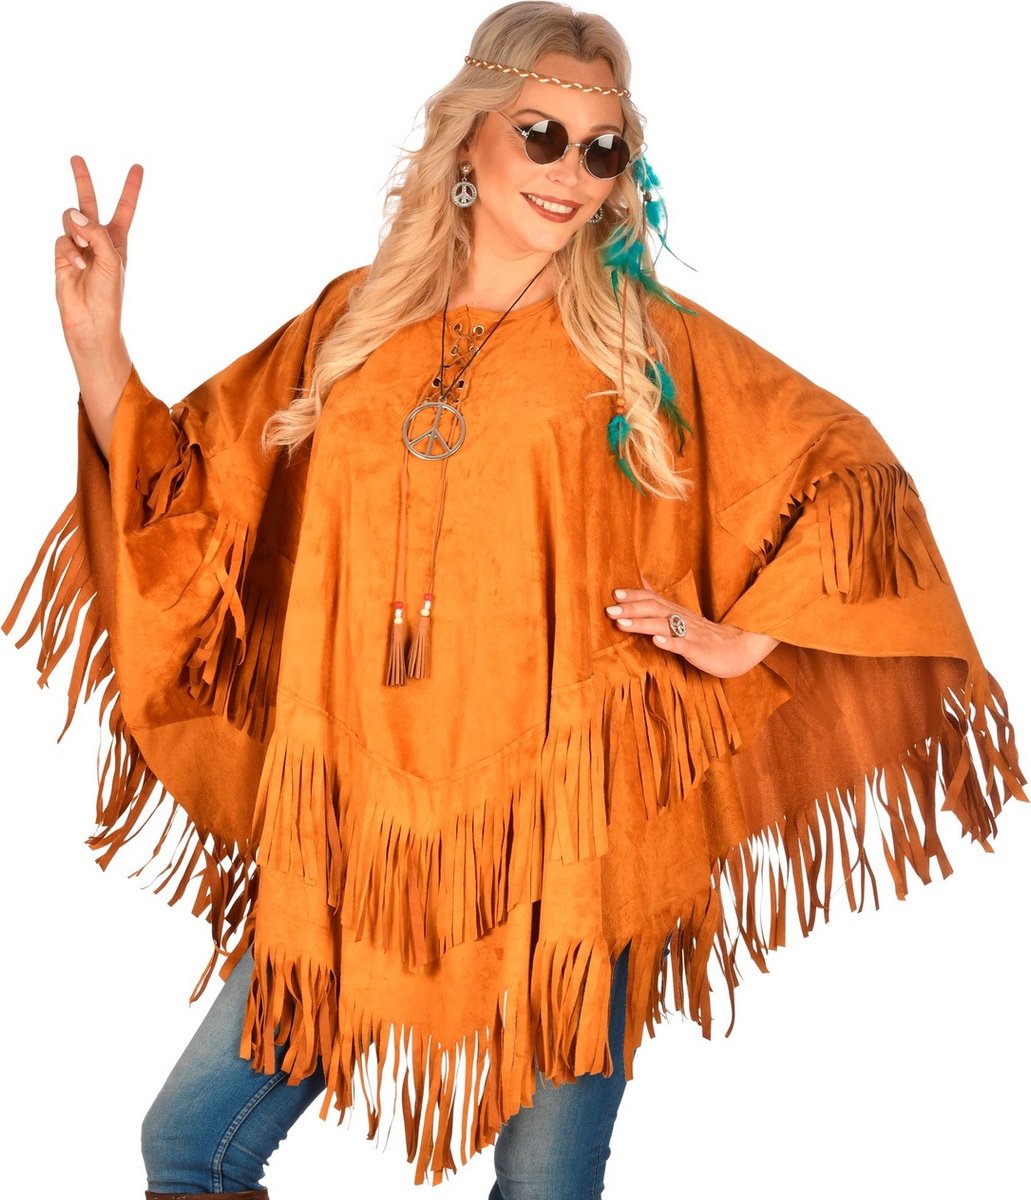 Widmann - Wilde Westen Kostuum - Poncho Met Franjes Prairie Hippie Kostuum - Bruin - One Size - Carnavalskleding - Verkleedkleding